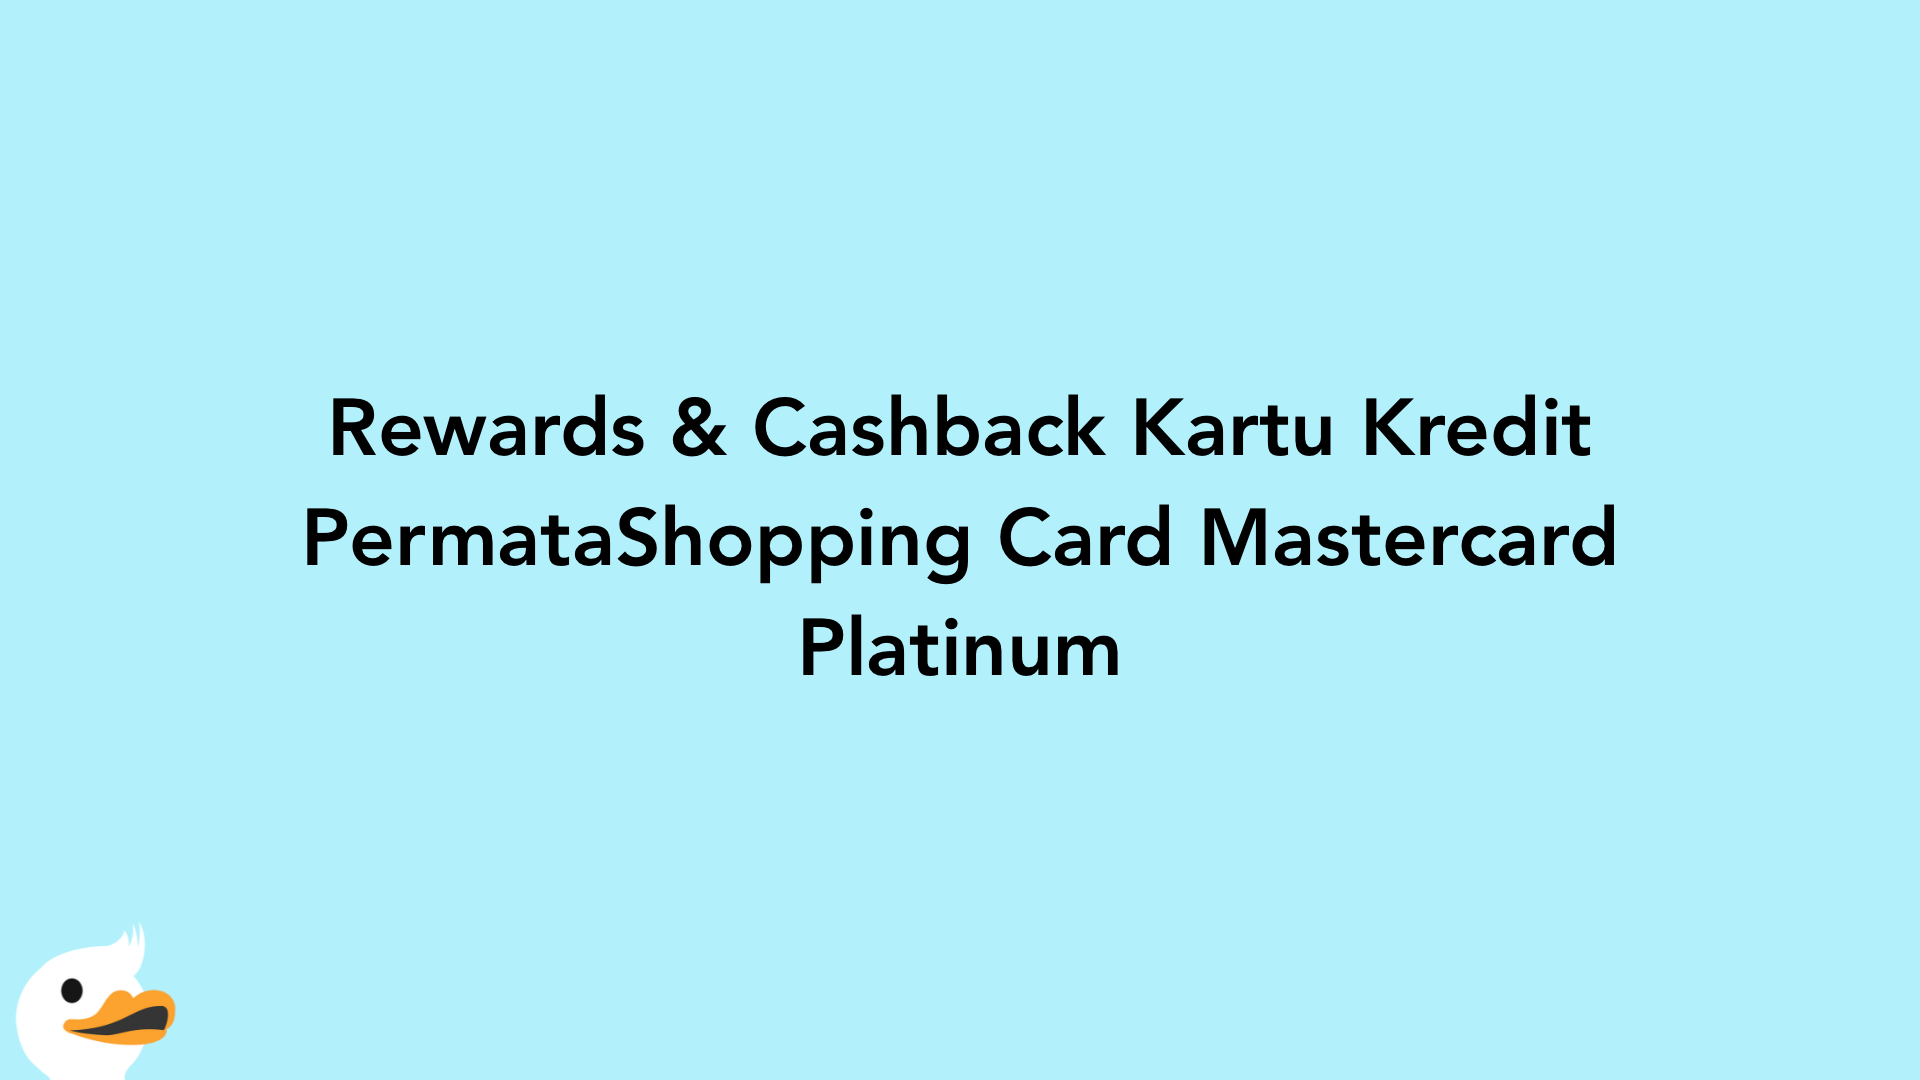 Rewards & Cashback Kartu Kredit PermataShopping Card Mastercard Platinum